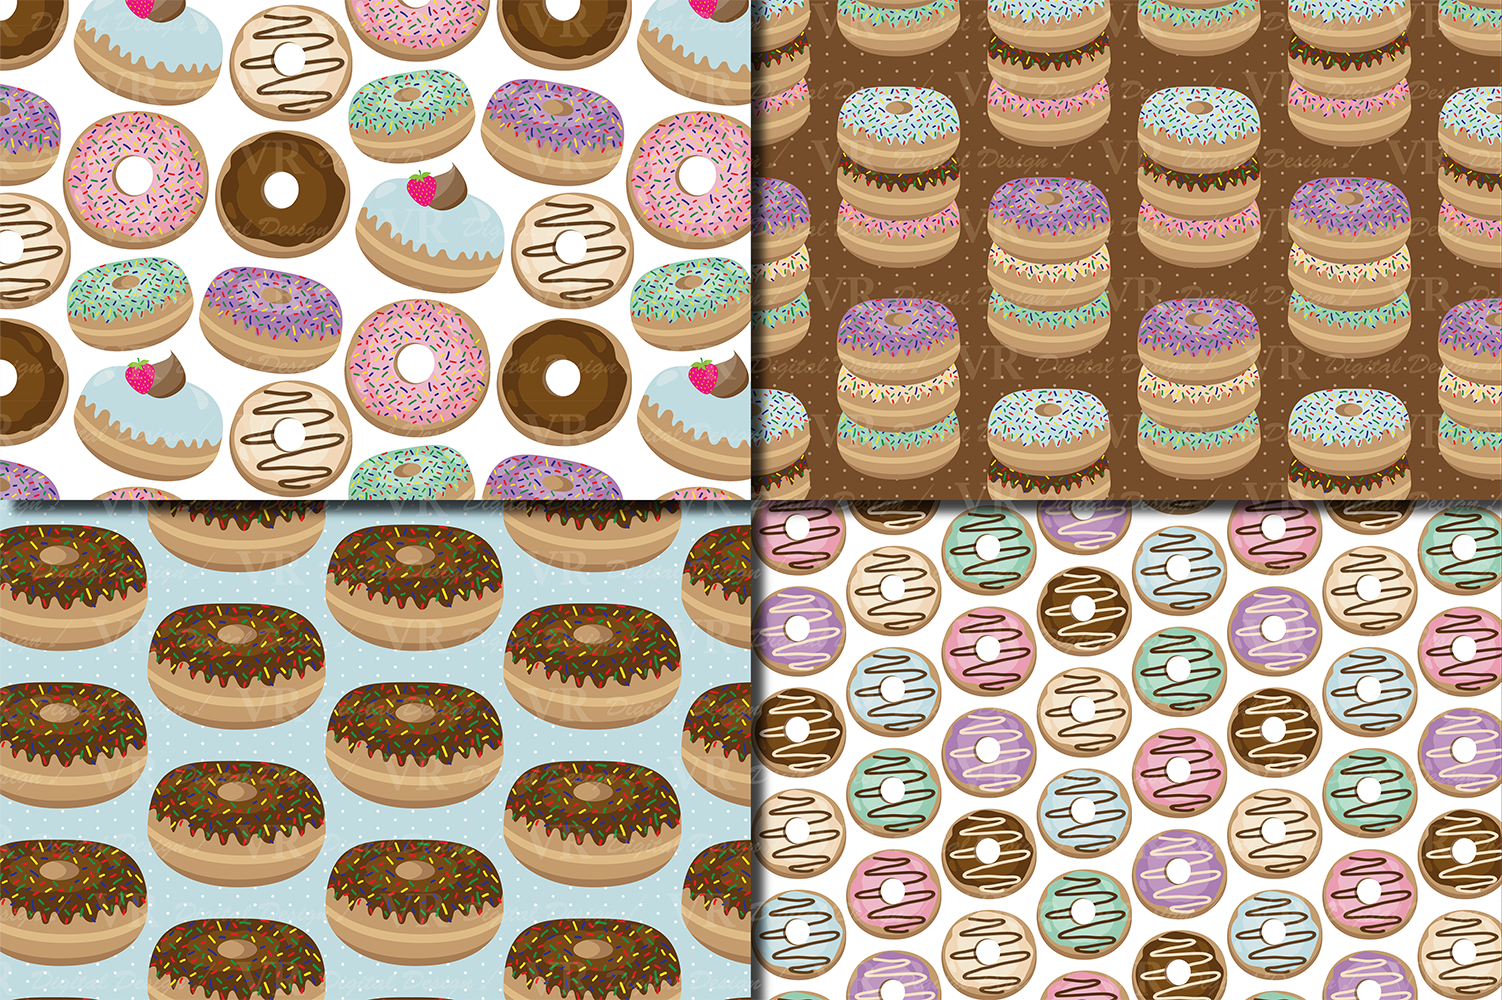 Download Donuts digital paper pack / Doughnut scrapbooking papers / Sprinkled donut backgrounds / Pastel ...